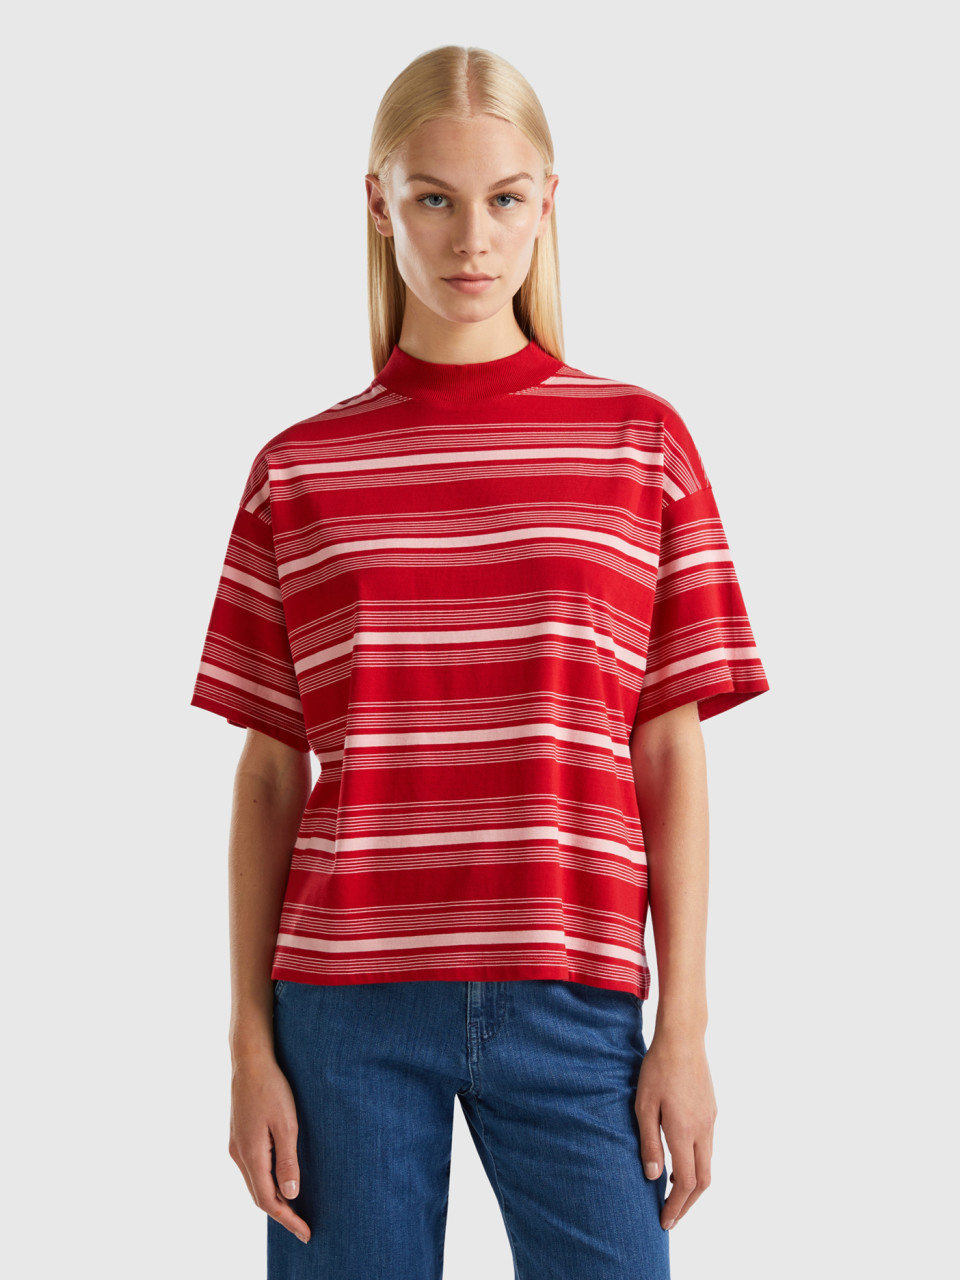 Benetton, Striped Turtleneck T-shirt, Red, Women